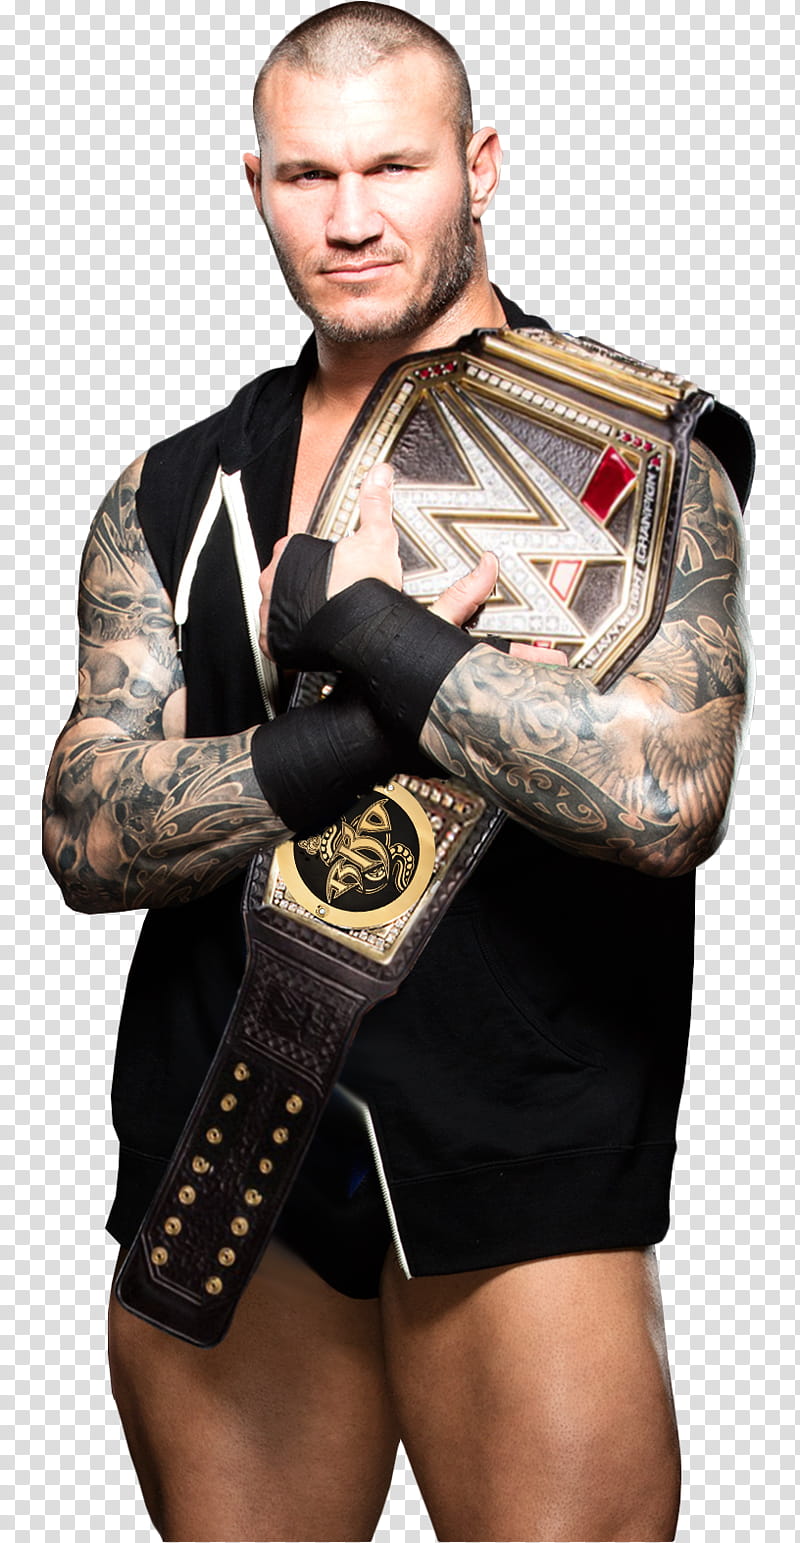 Randy Orton WWE Champion render transparent background PNG.